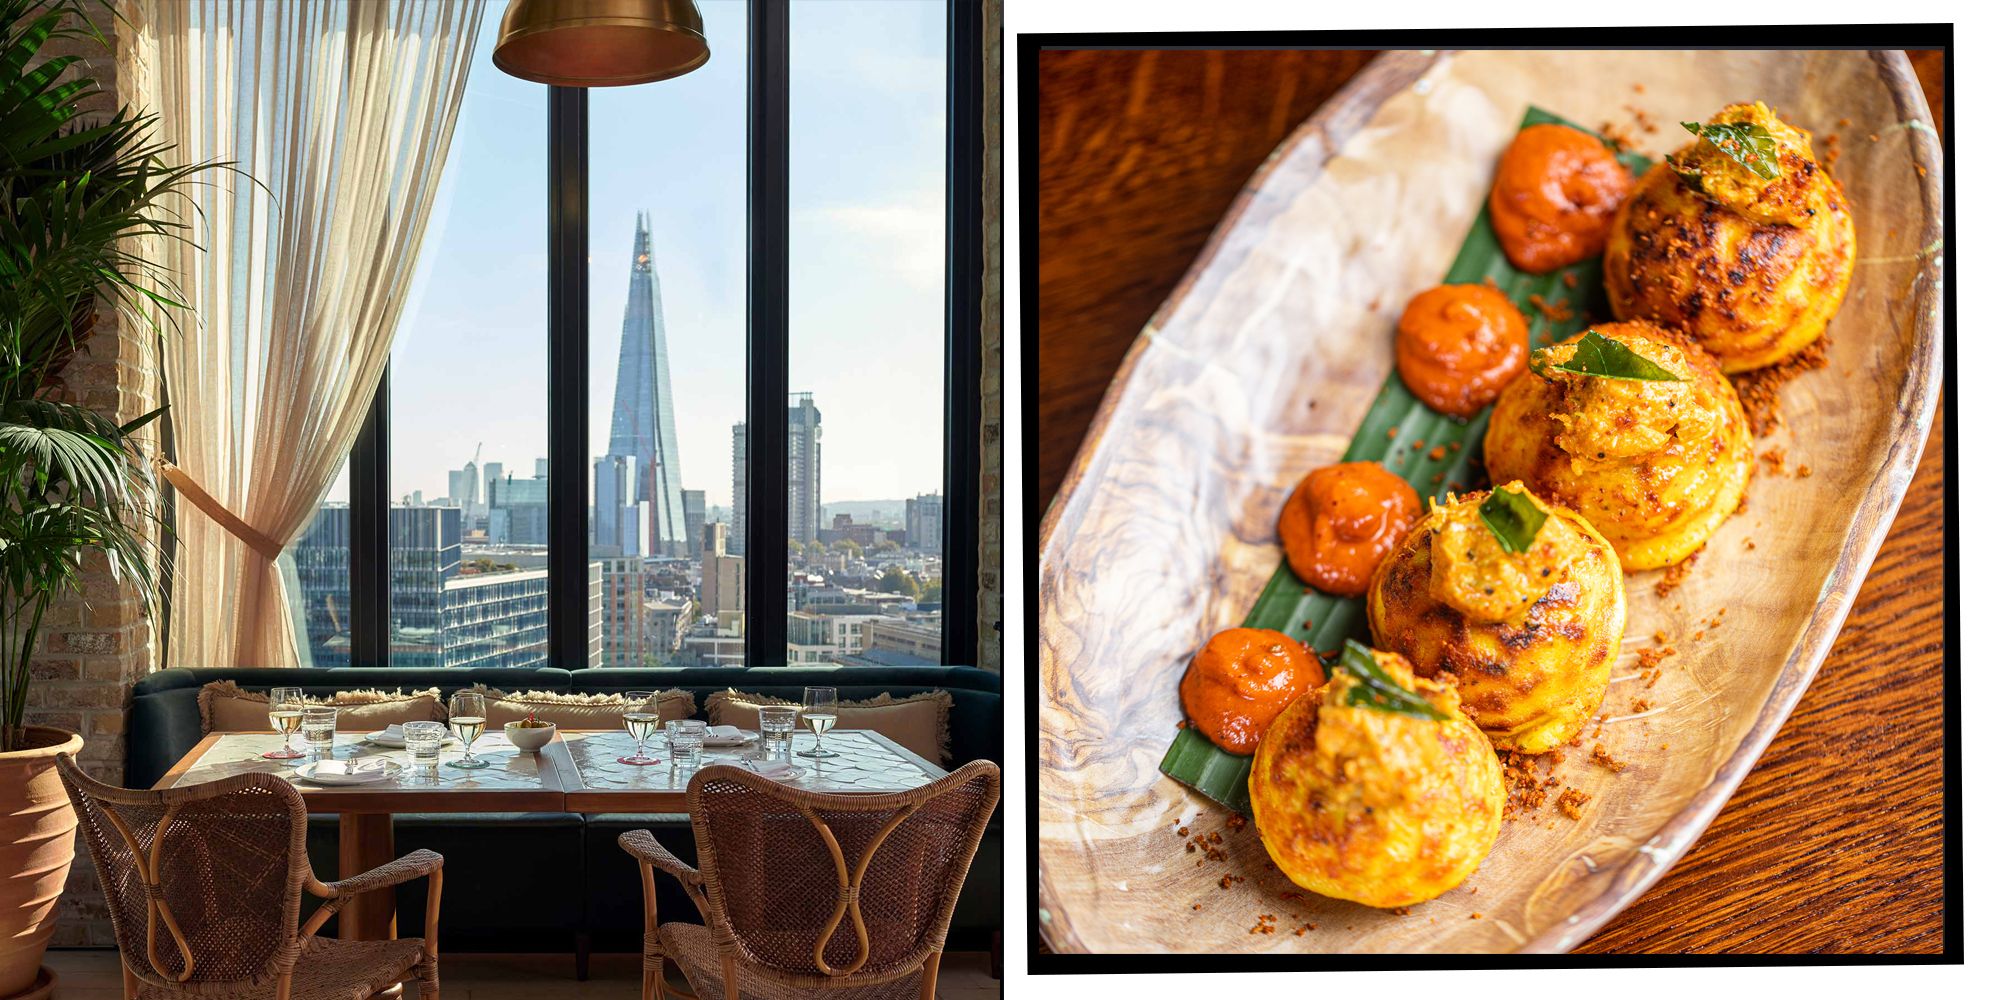 Best Restaurants For Birthdays London : Fun Restaurants In London For